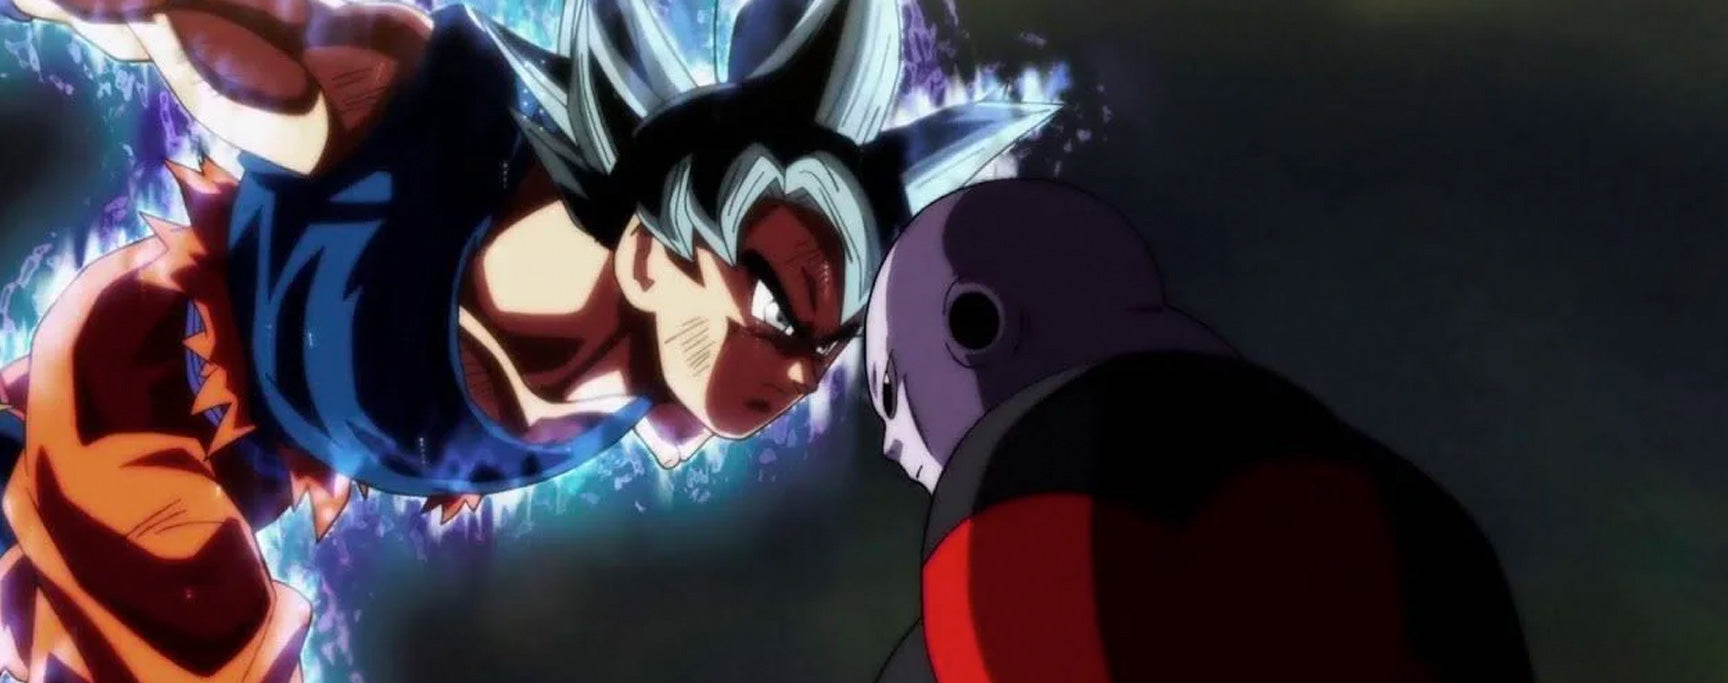 Jiren vs. Goku